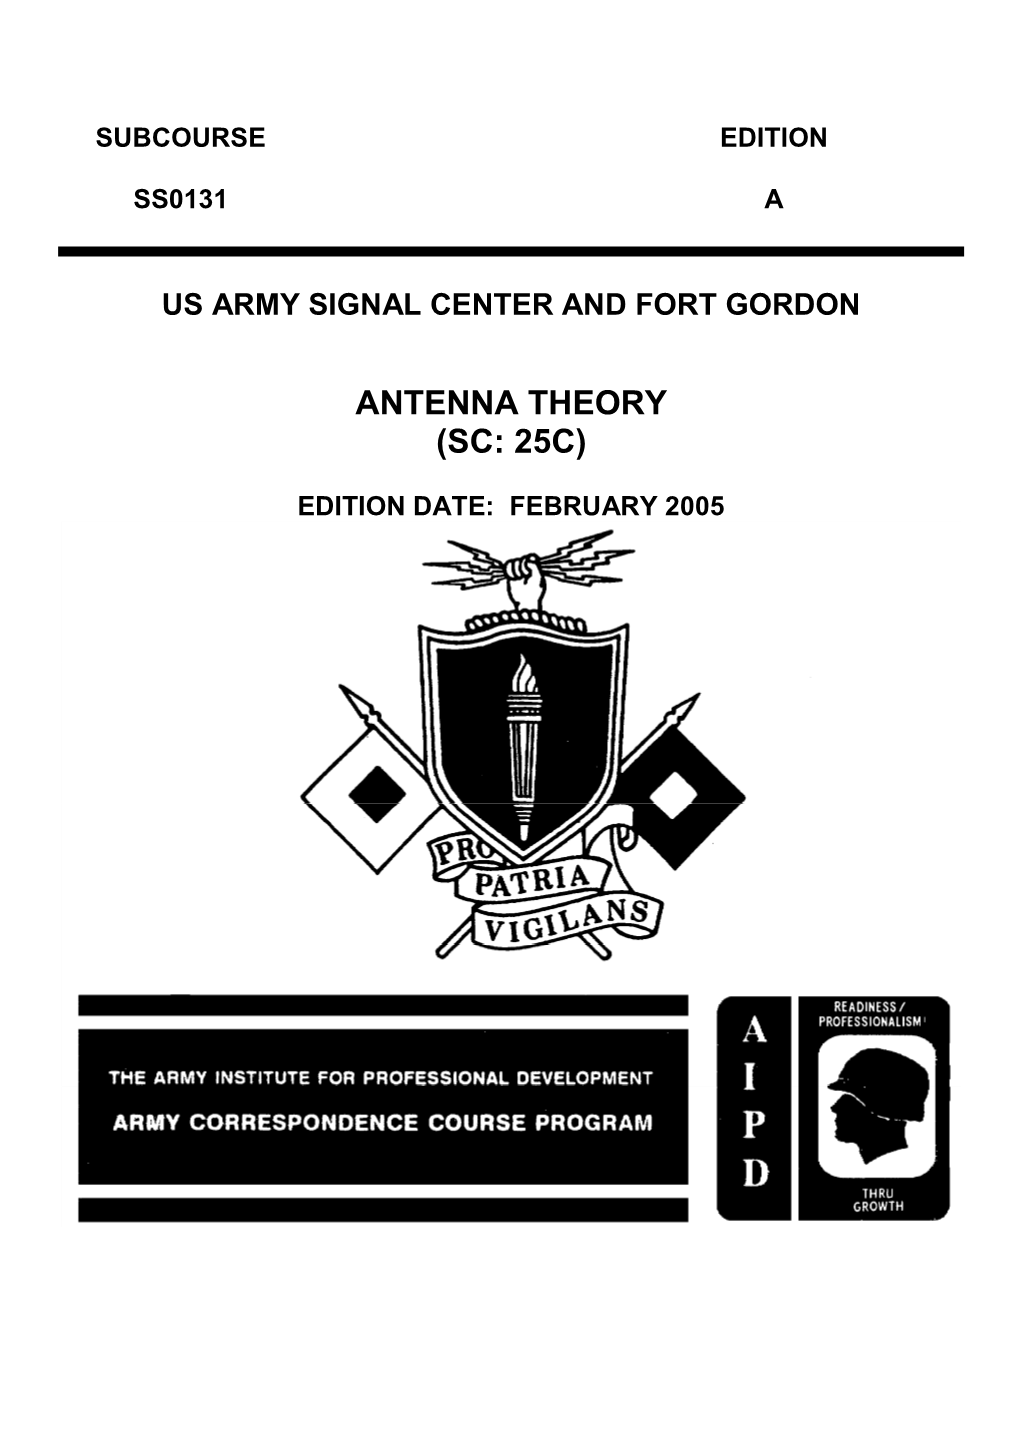 Antenna Theory (Sc: 25C)